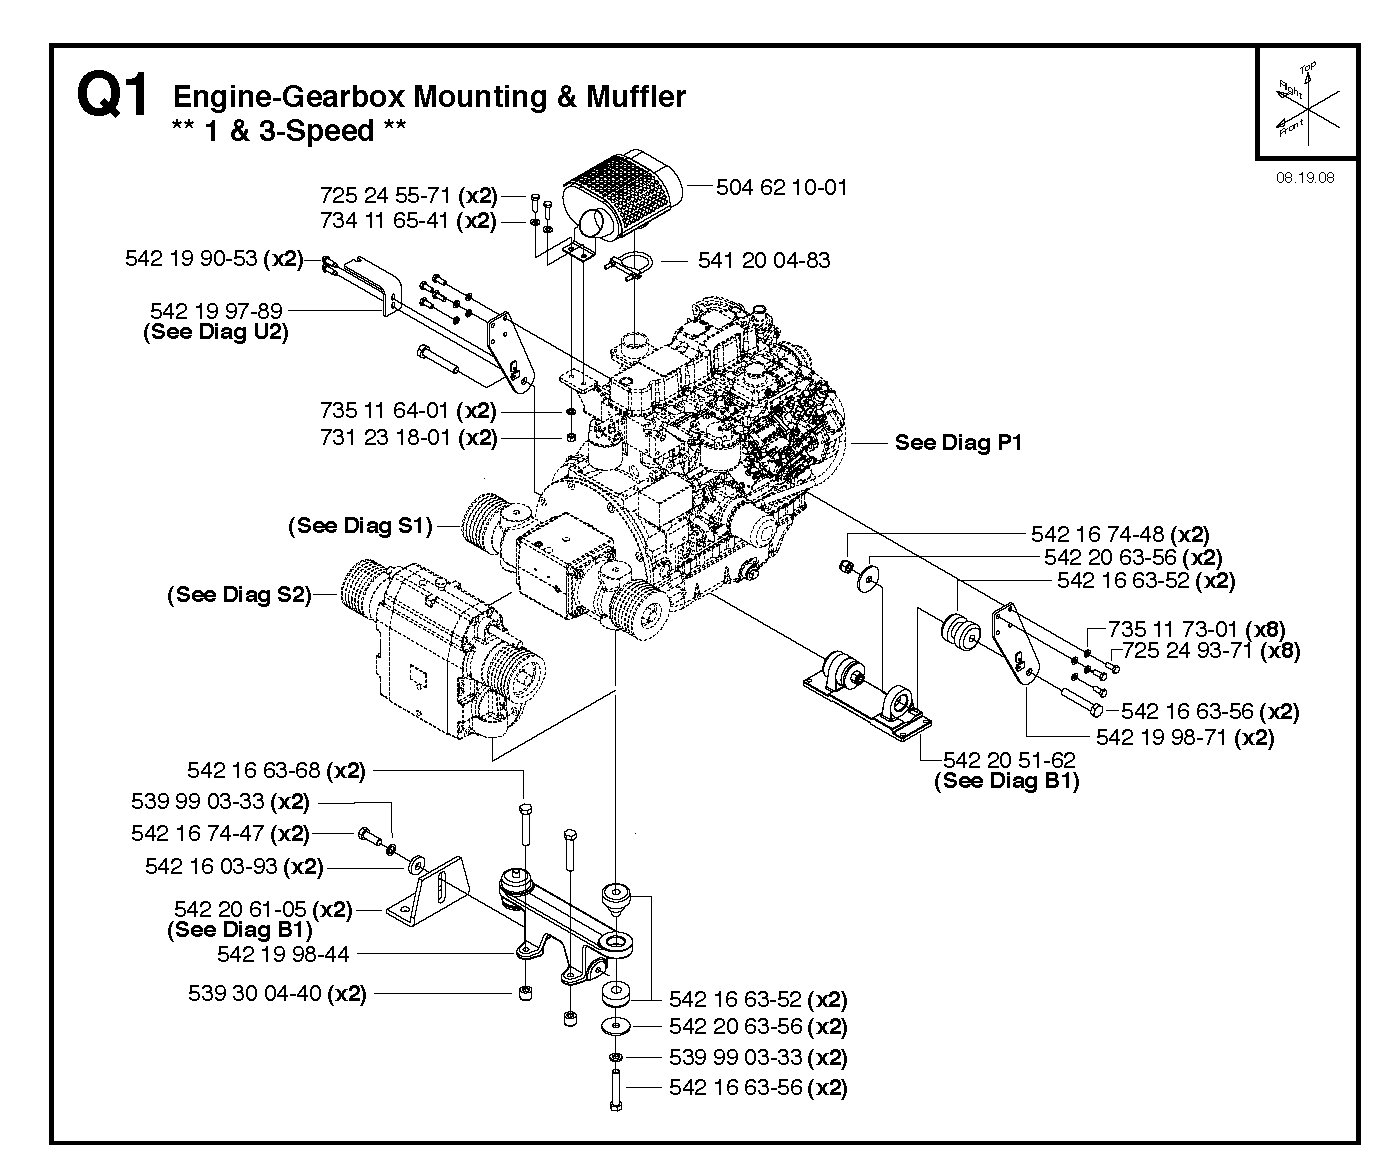 ENGINE-GEARBOX MOUNTING & MUFFLER, 1 & 3-SPEED